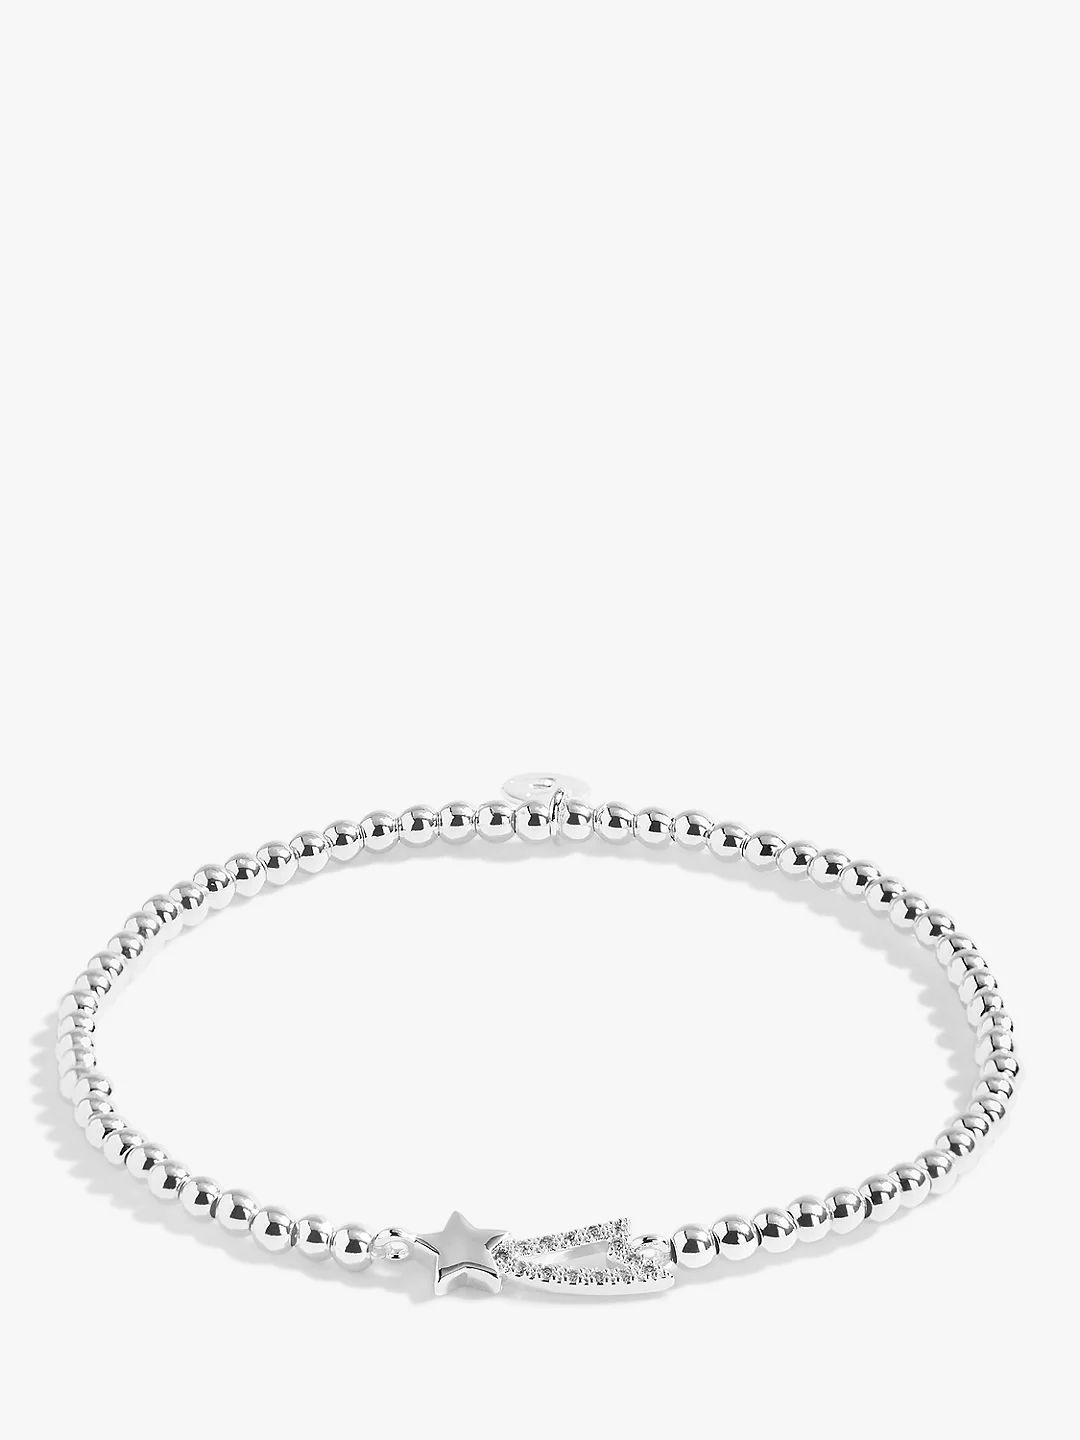 Joma Jewellery A Little Christmas Wish Bracelet, Silver | John Lewis (UK)